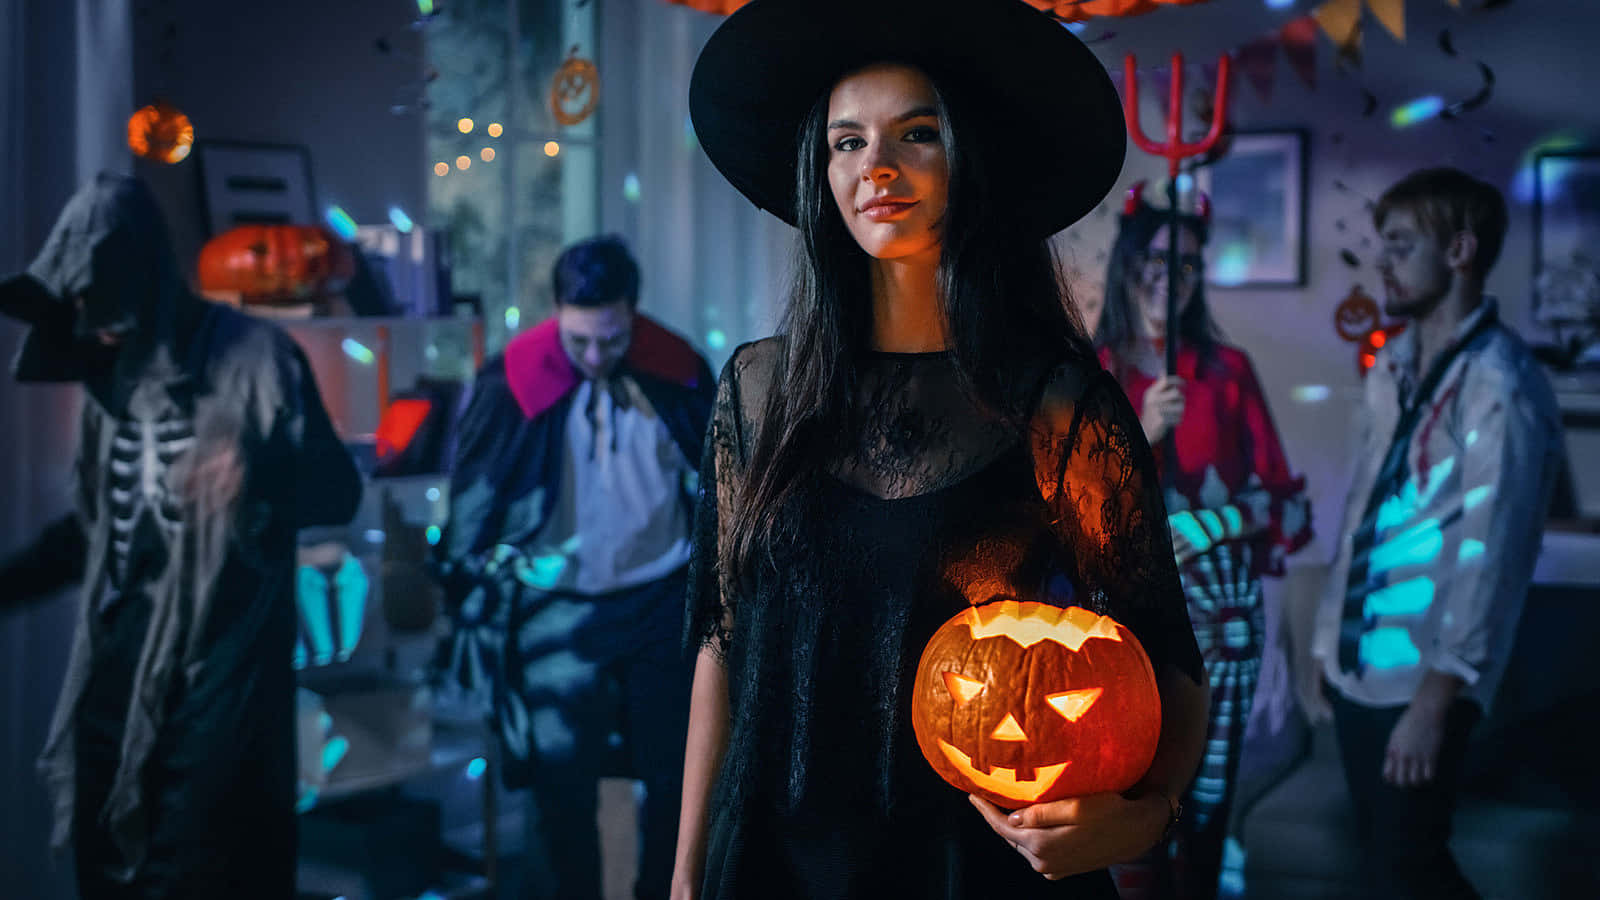 A Woman In A Halloween Costume Holding A Pumpkin